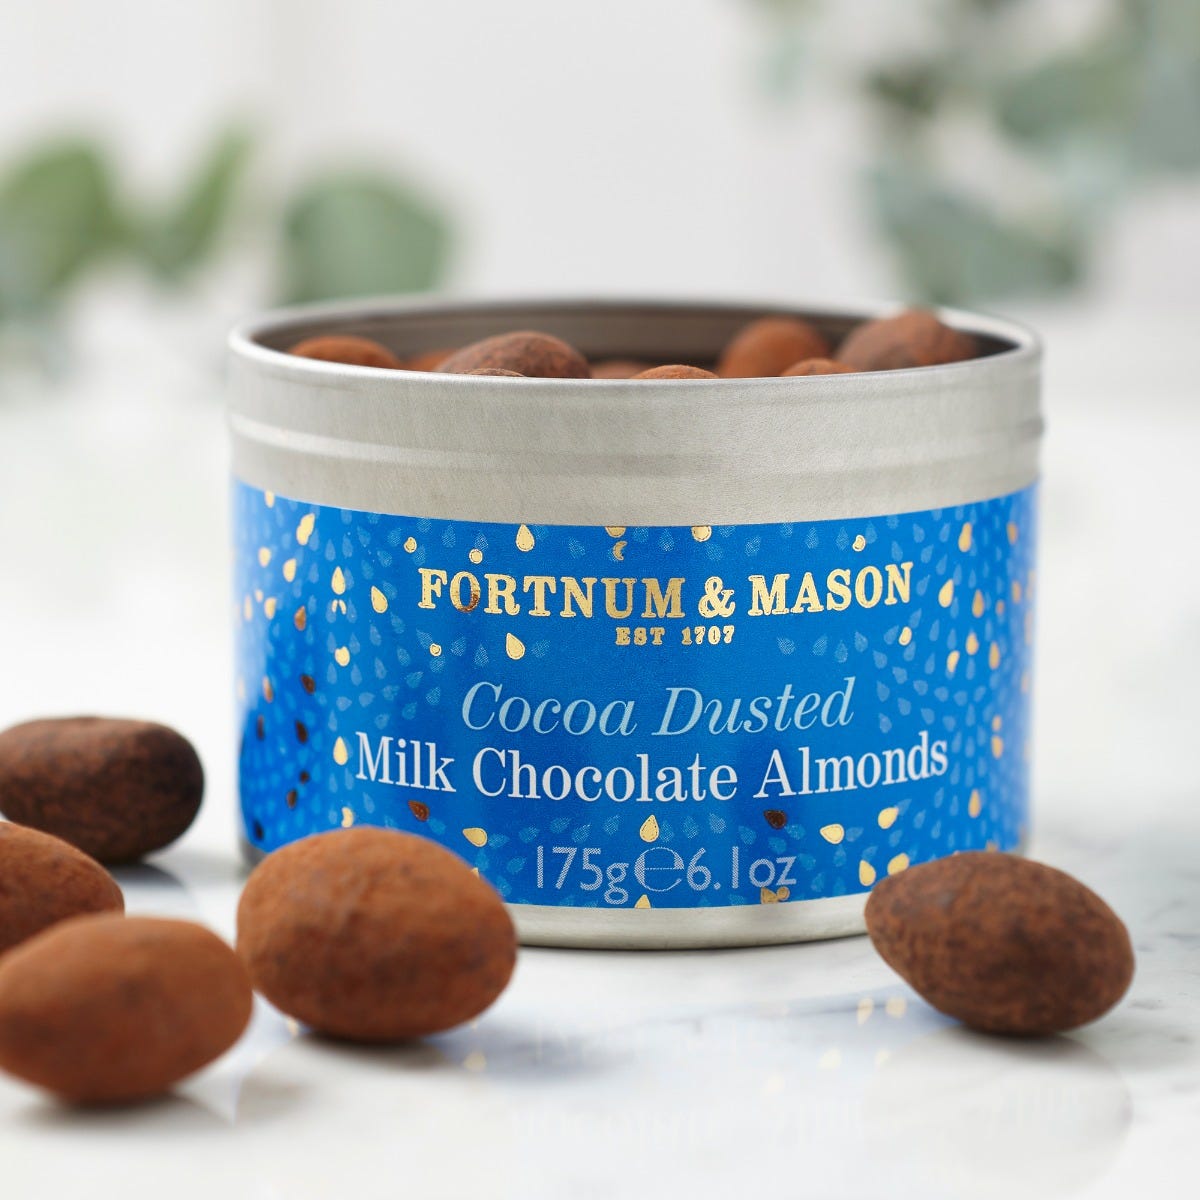 Cocoa Dusted Milk Chocolate Almonds, 170g, Fortnum & Mason